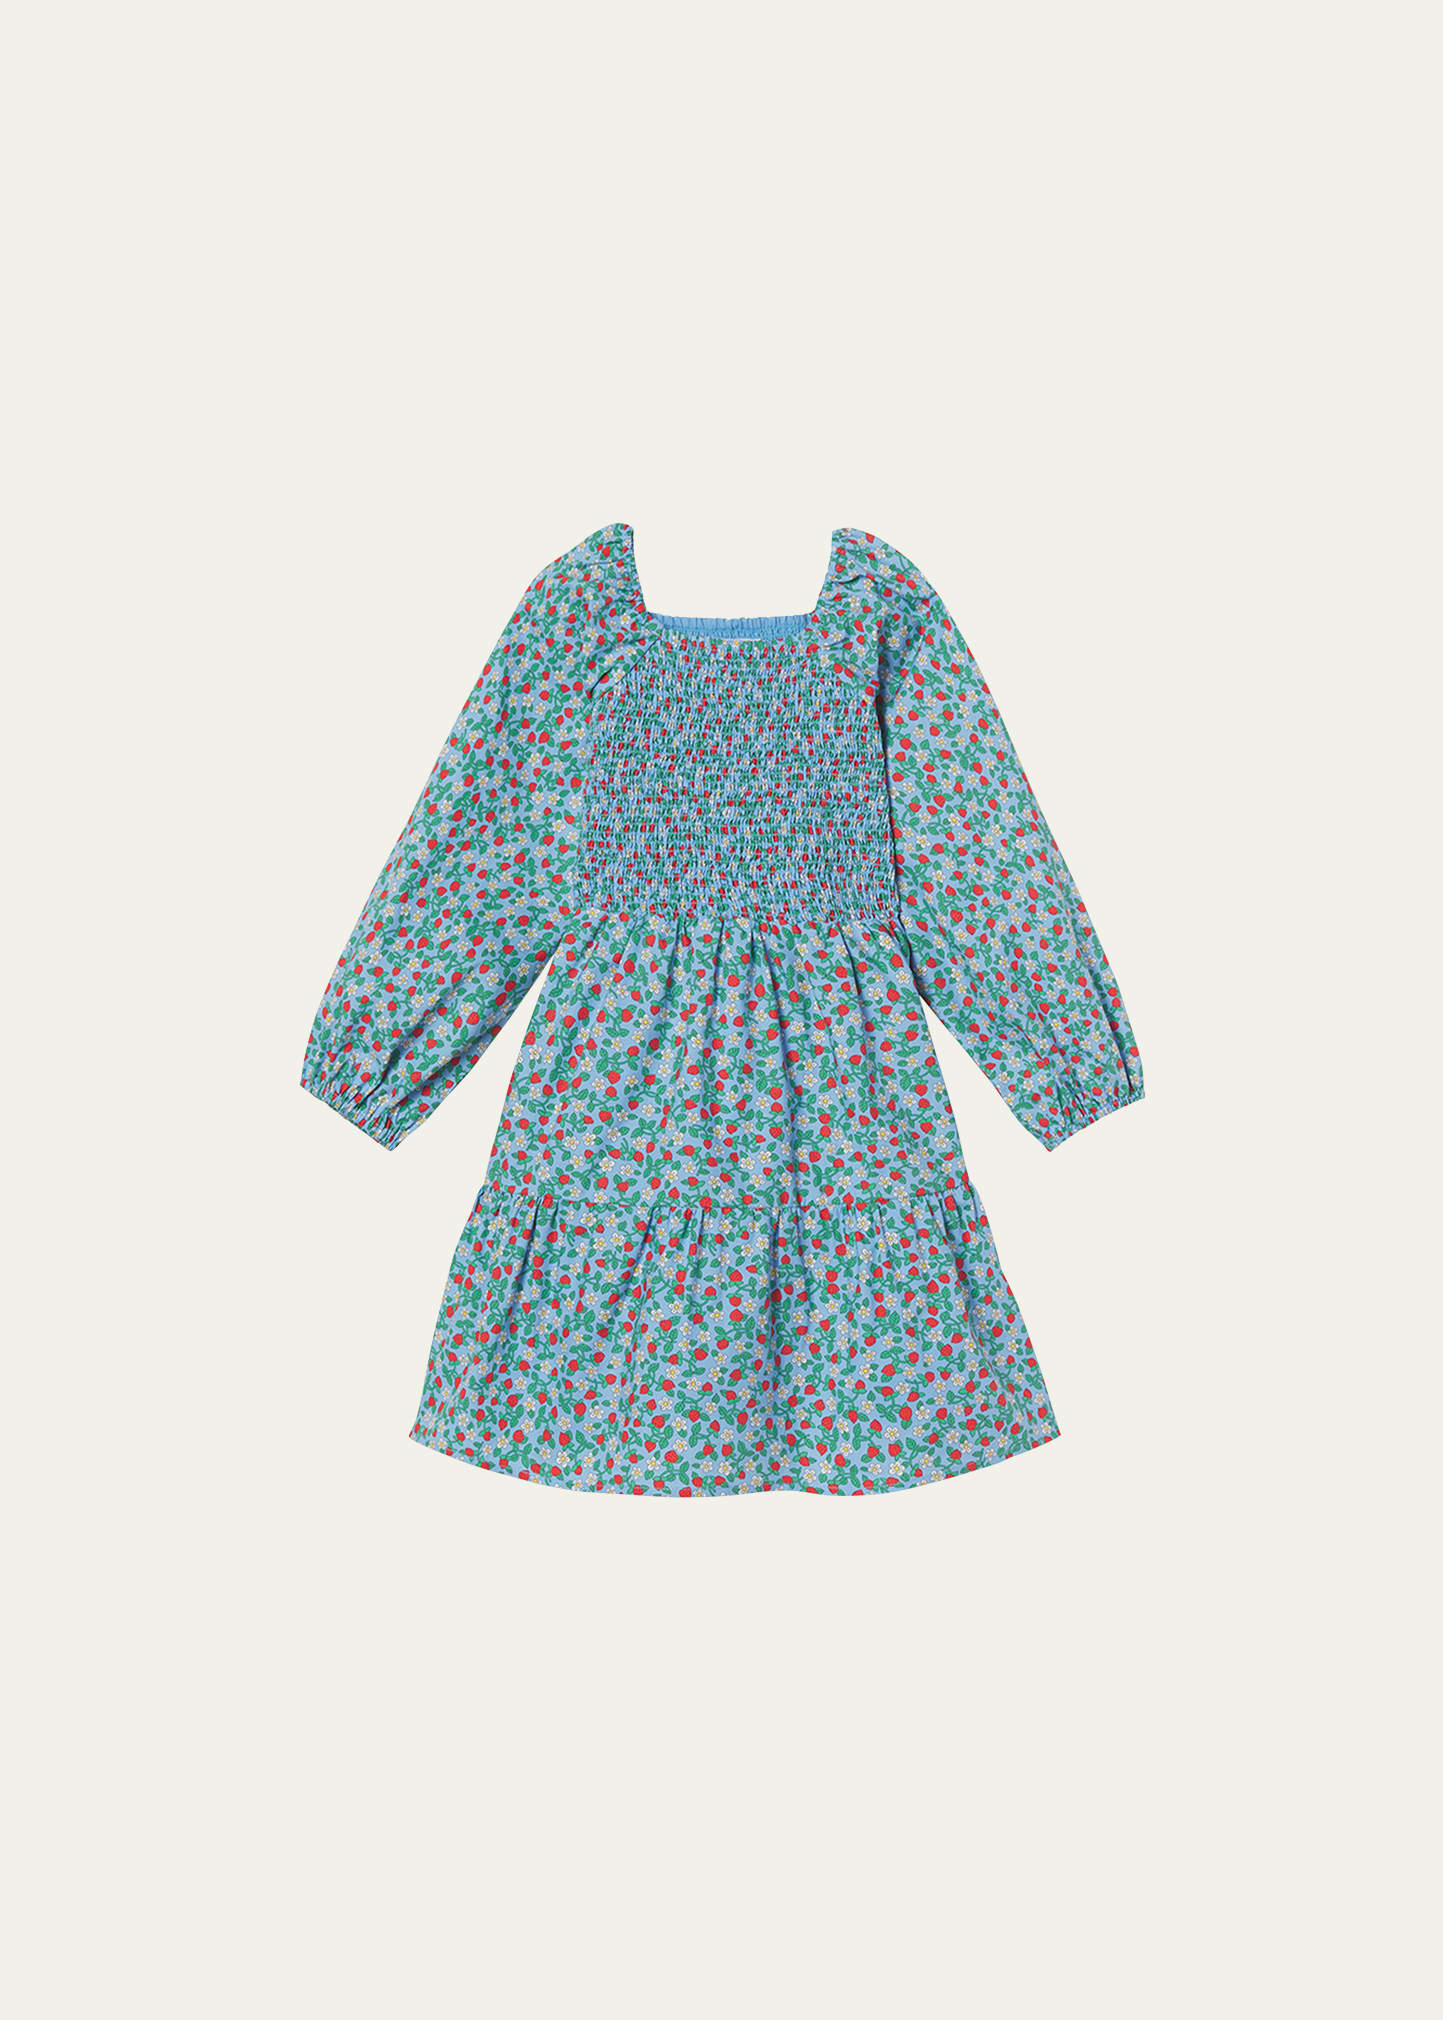 Classic Prep Childrenswear Girl's Hattie Tiered Strawberry-Print Dress, Size 2-14